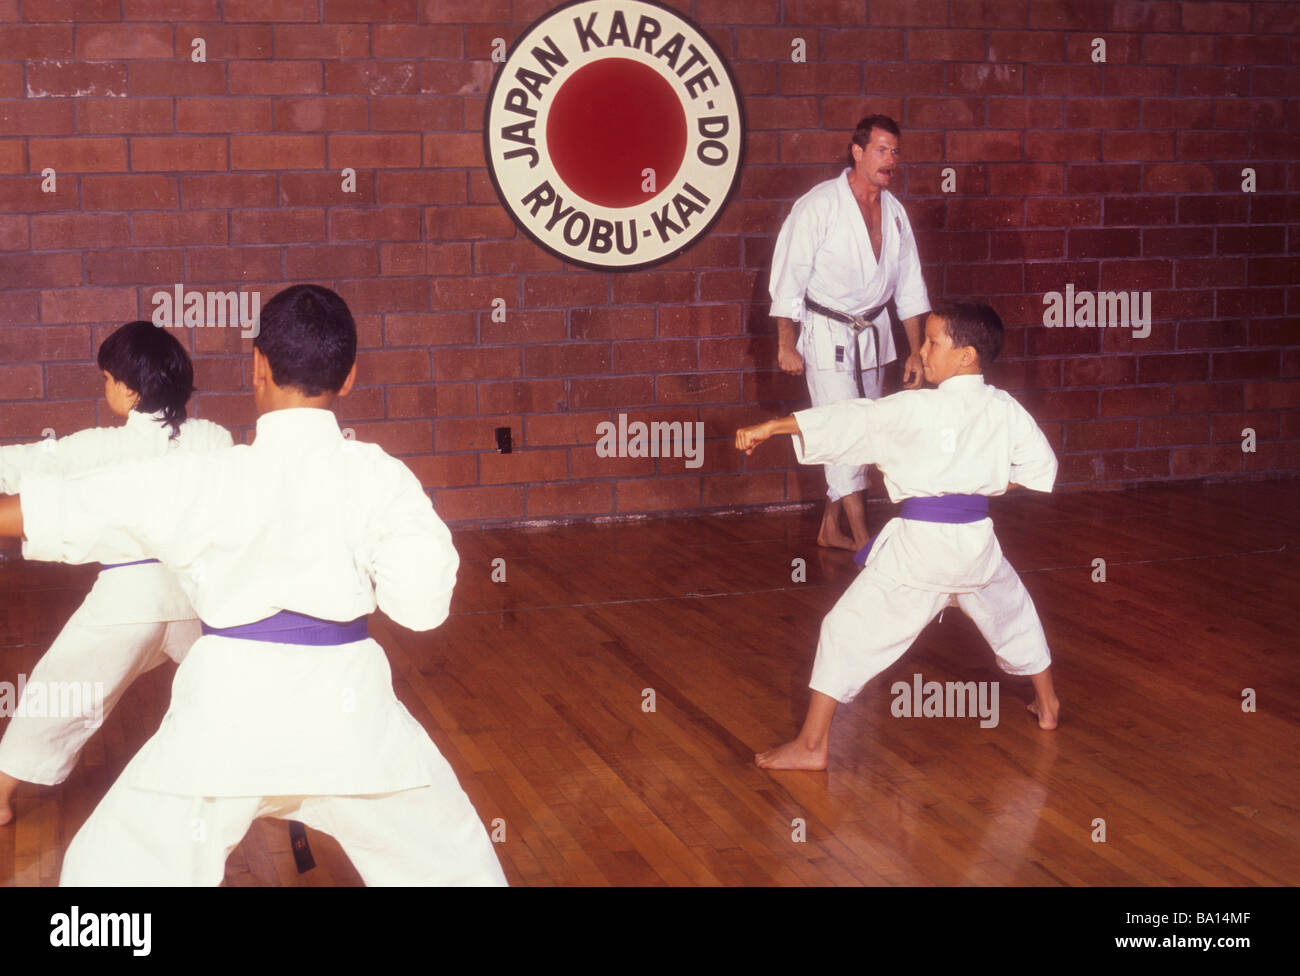 Student karate self defense martial arts sensi dojo class demonstrate show teach learn balance respect exercise Stock Photo